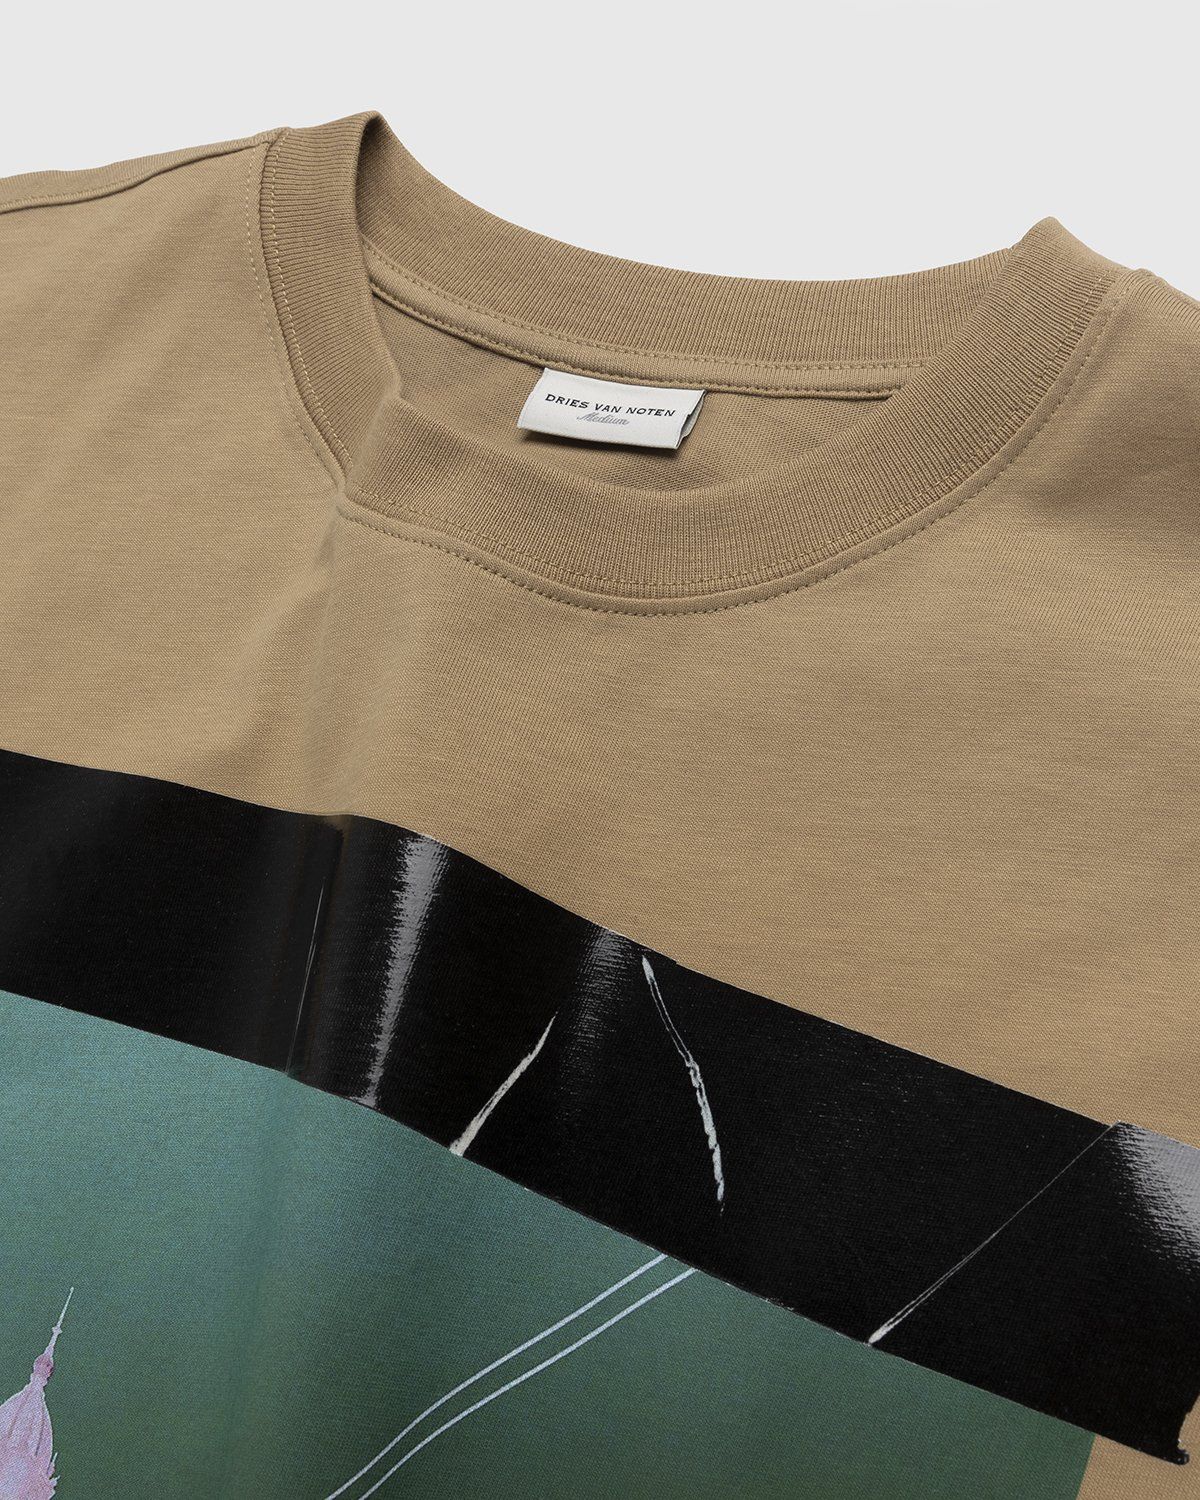 Dries van Noten – Heli Graphic T-Shirt Sand - T-shirts - Beige - Image 3